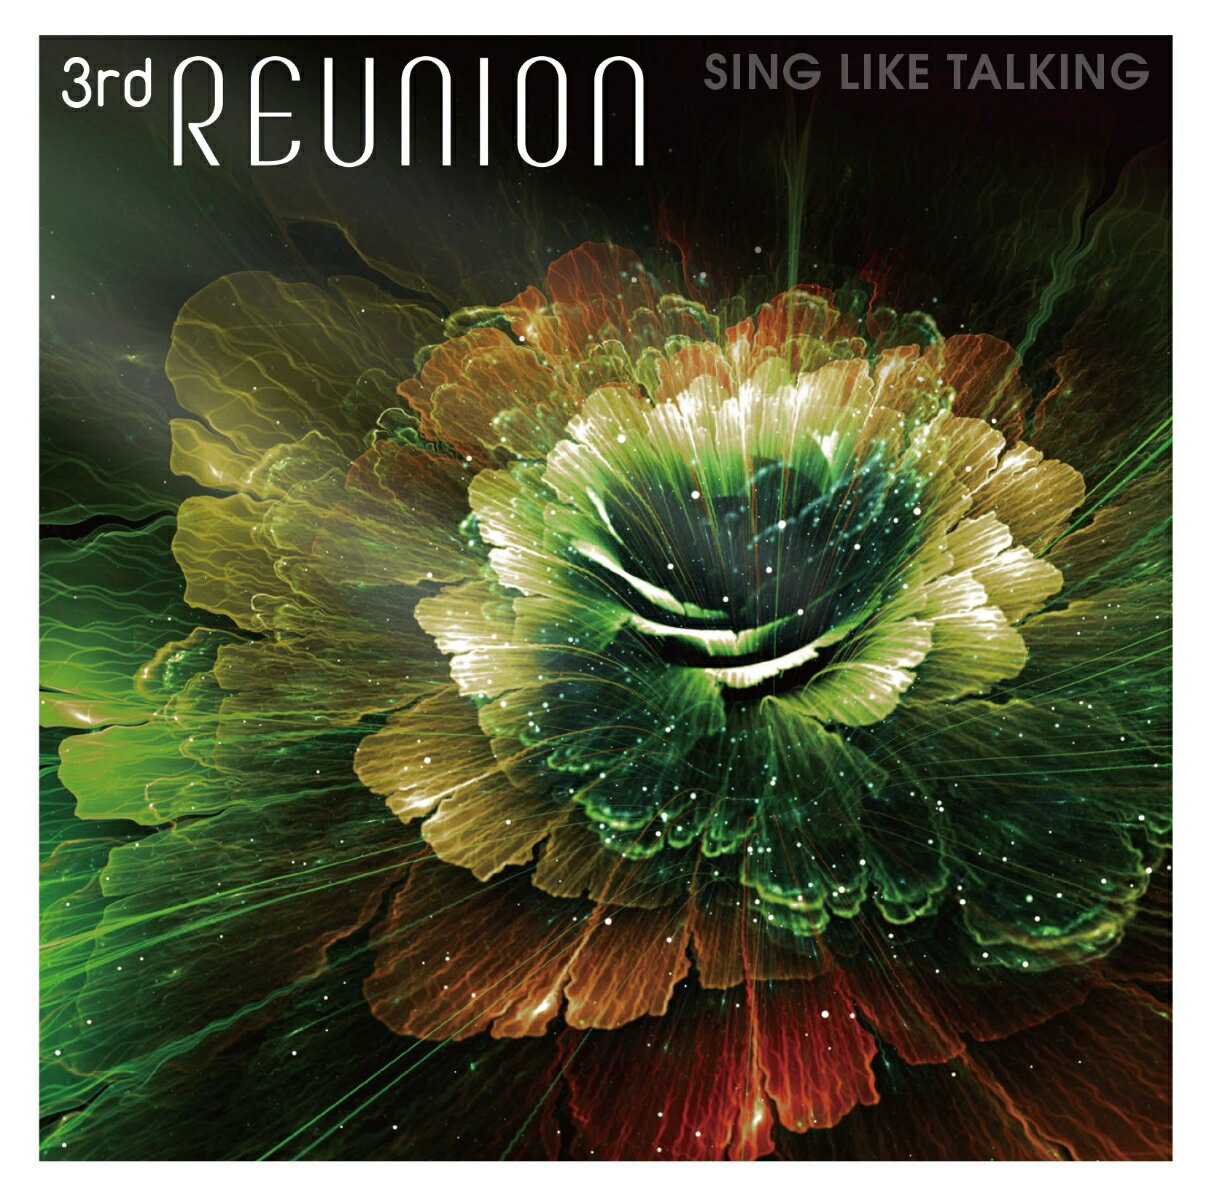 3rd REUNION (通常盤) SING LIKE TALKING